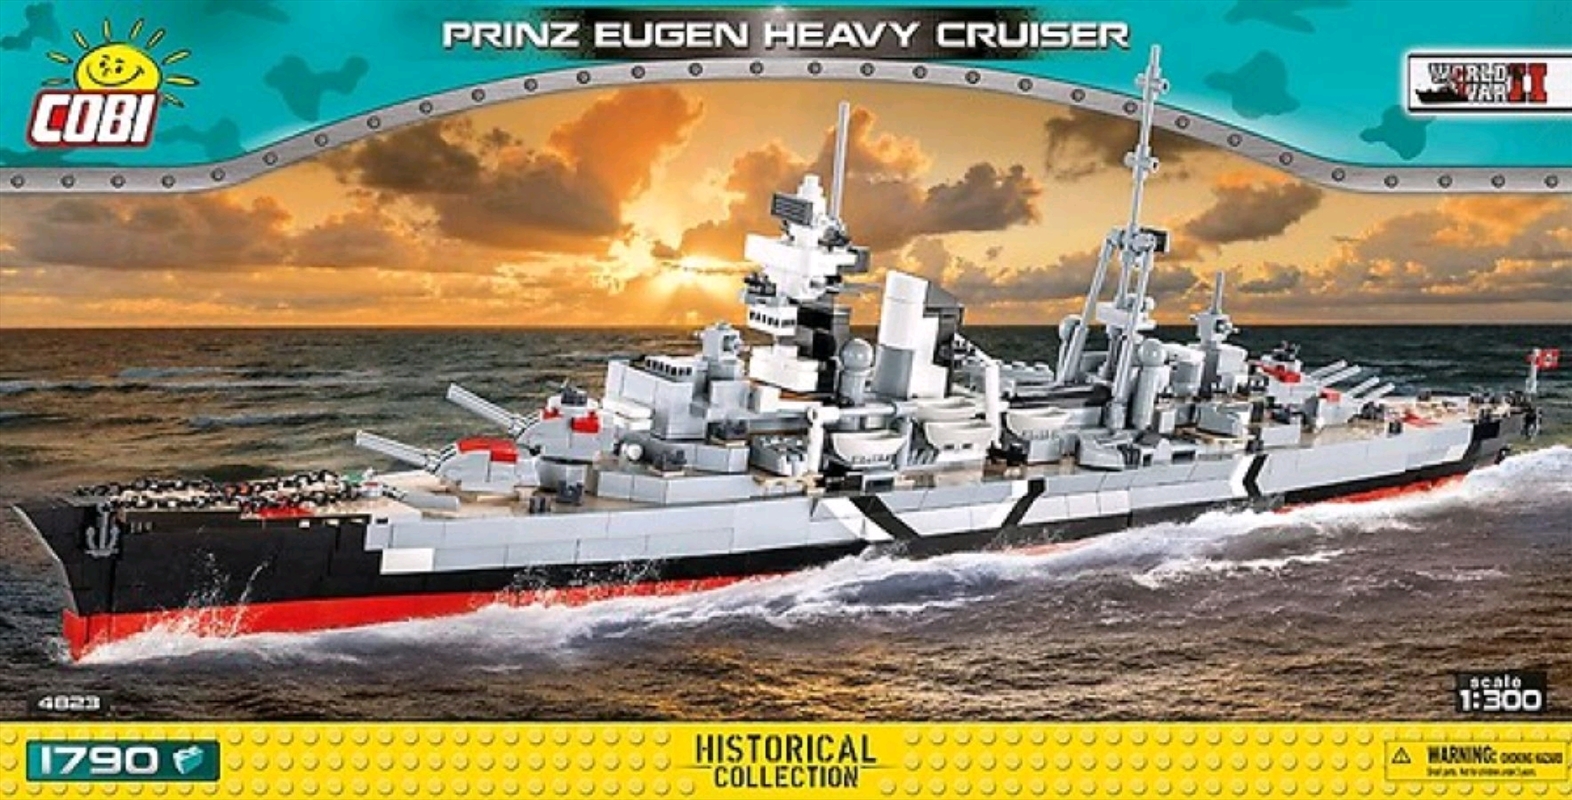 World War II - Prinz Eugen Heavy Cruiser 1:300 Scale 1790 pieces/Product Detail/Building Sets & Blocks